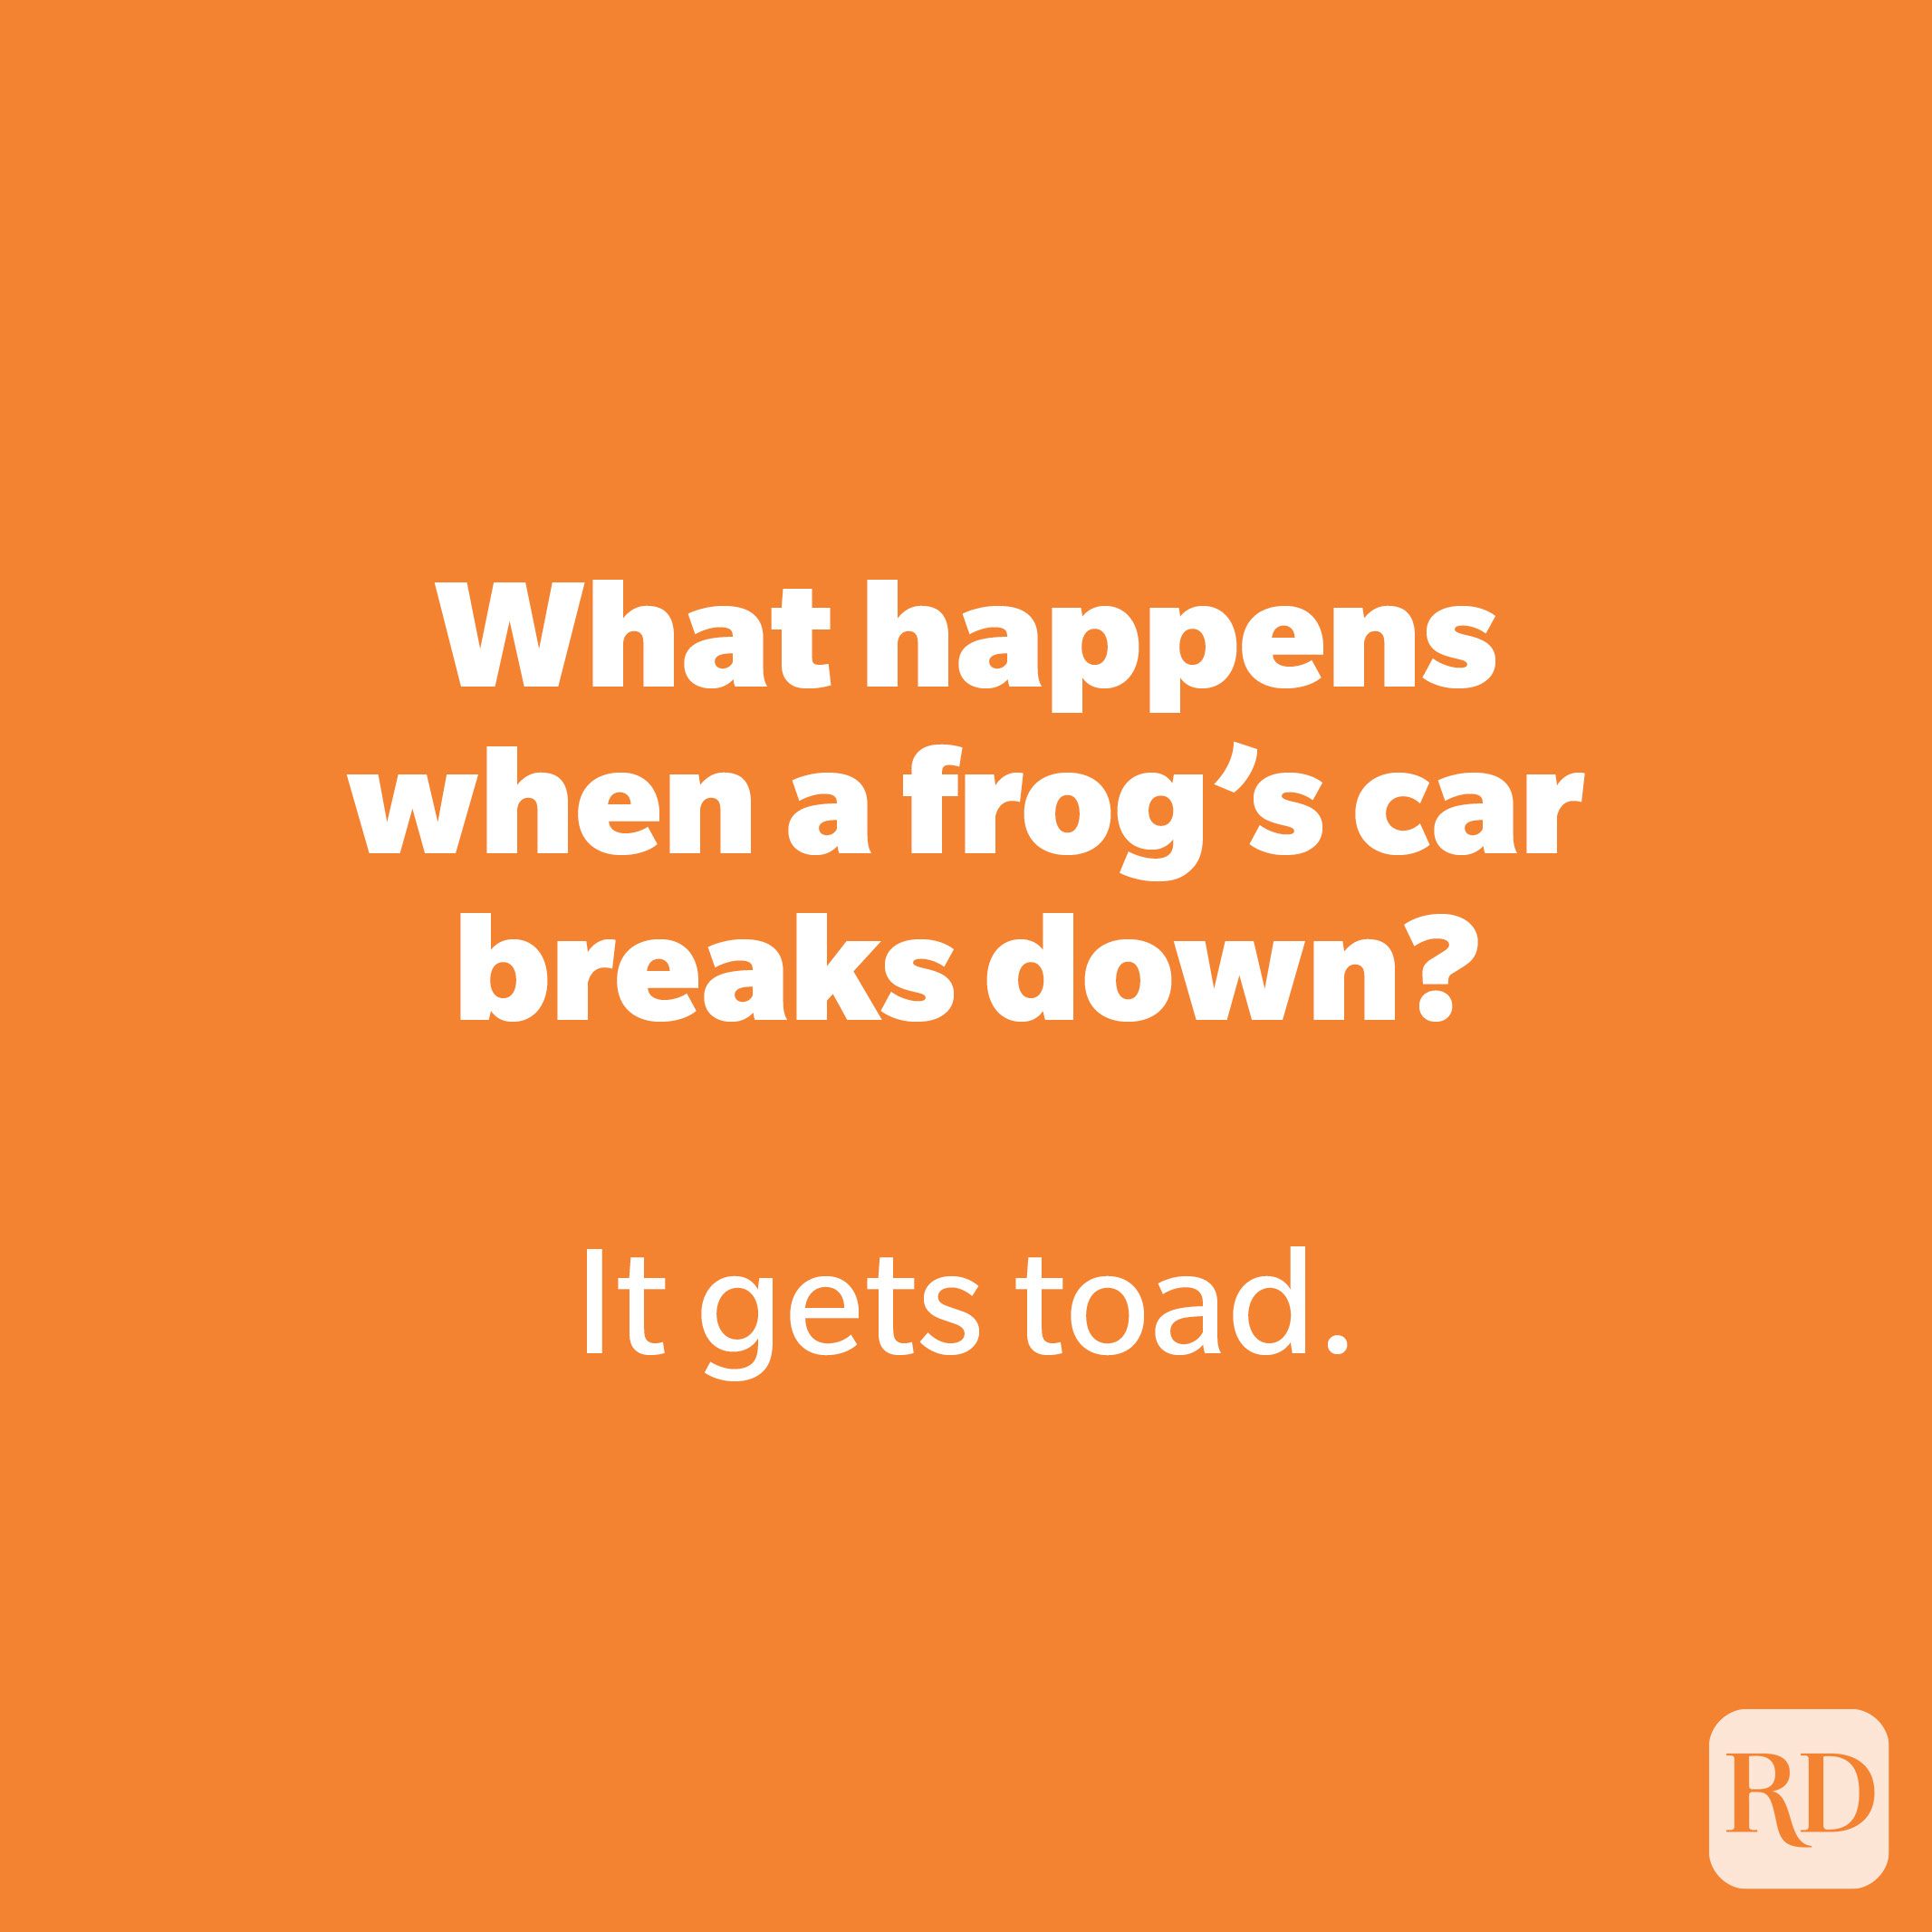 What happens when a frog’s car breaks down?